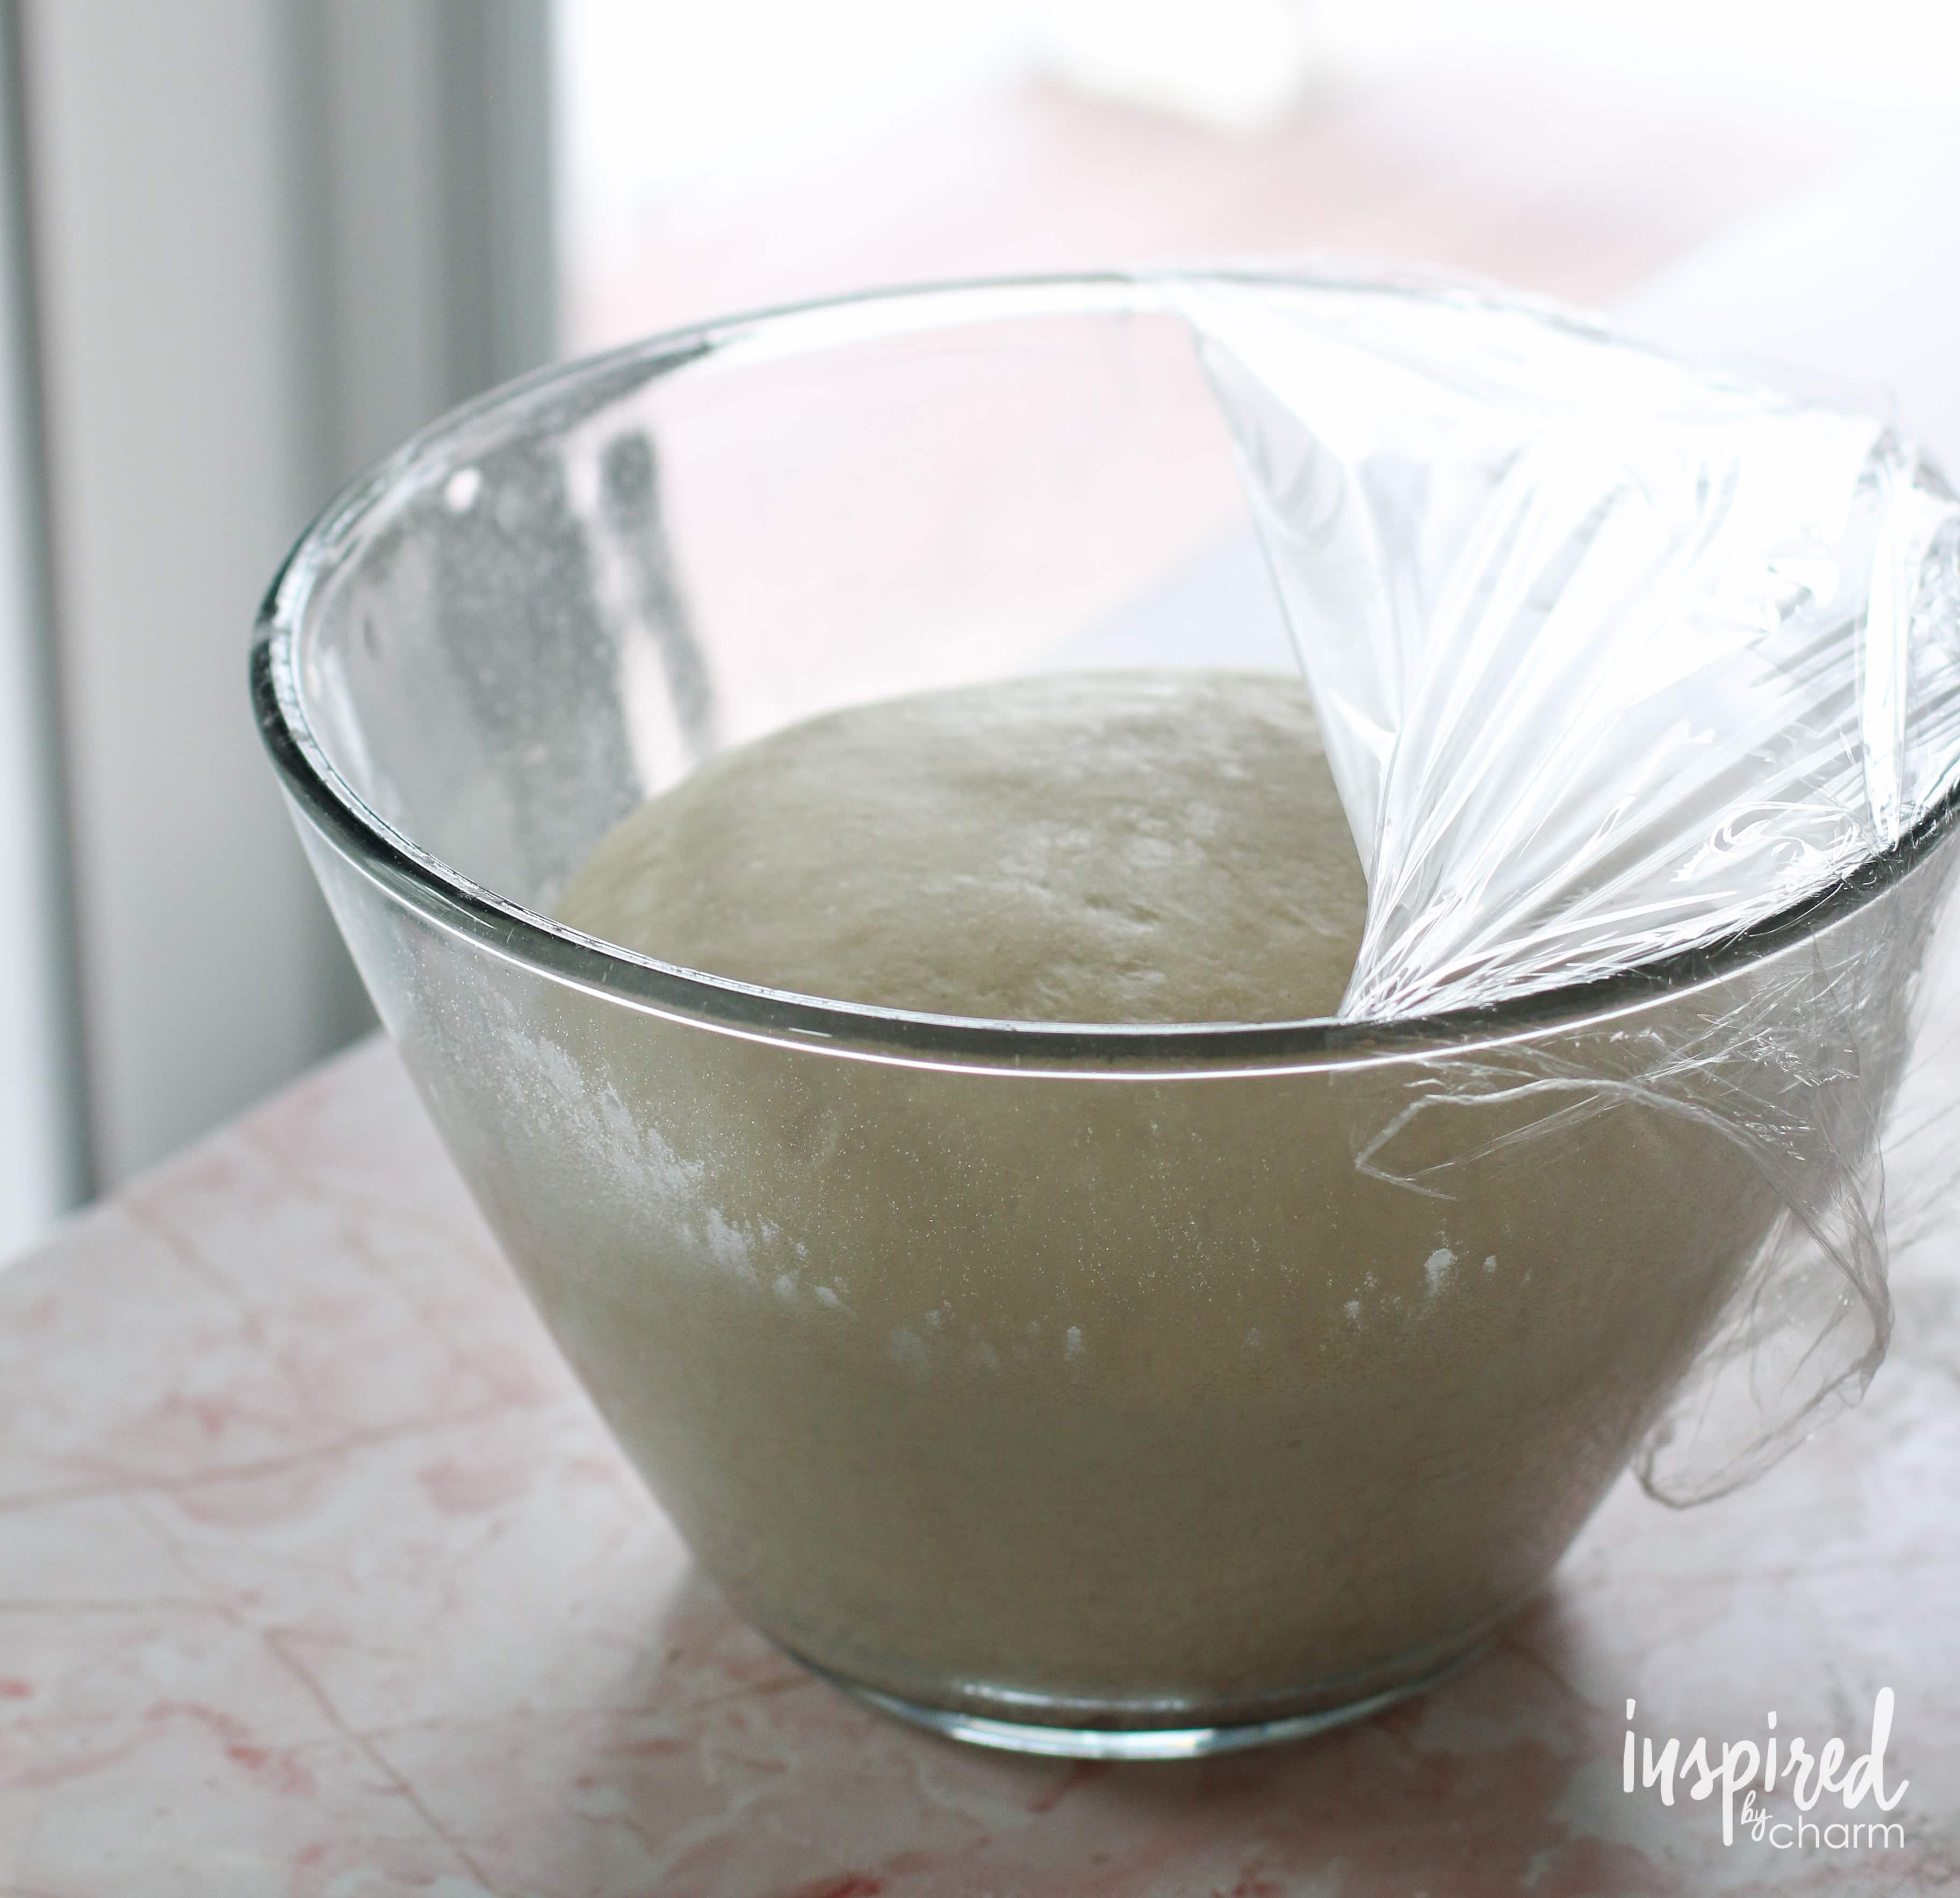 Cinnamon Roll Skillet Bread dough rising in a bowl.